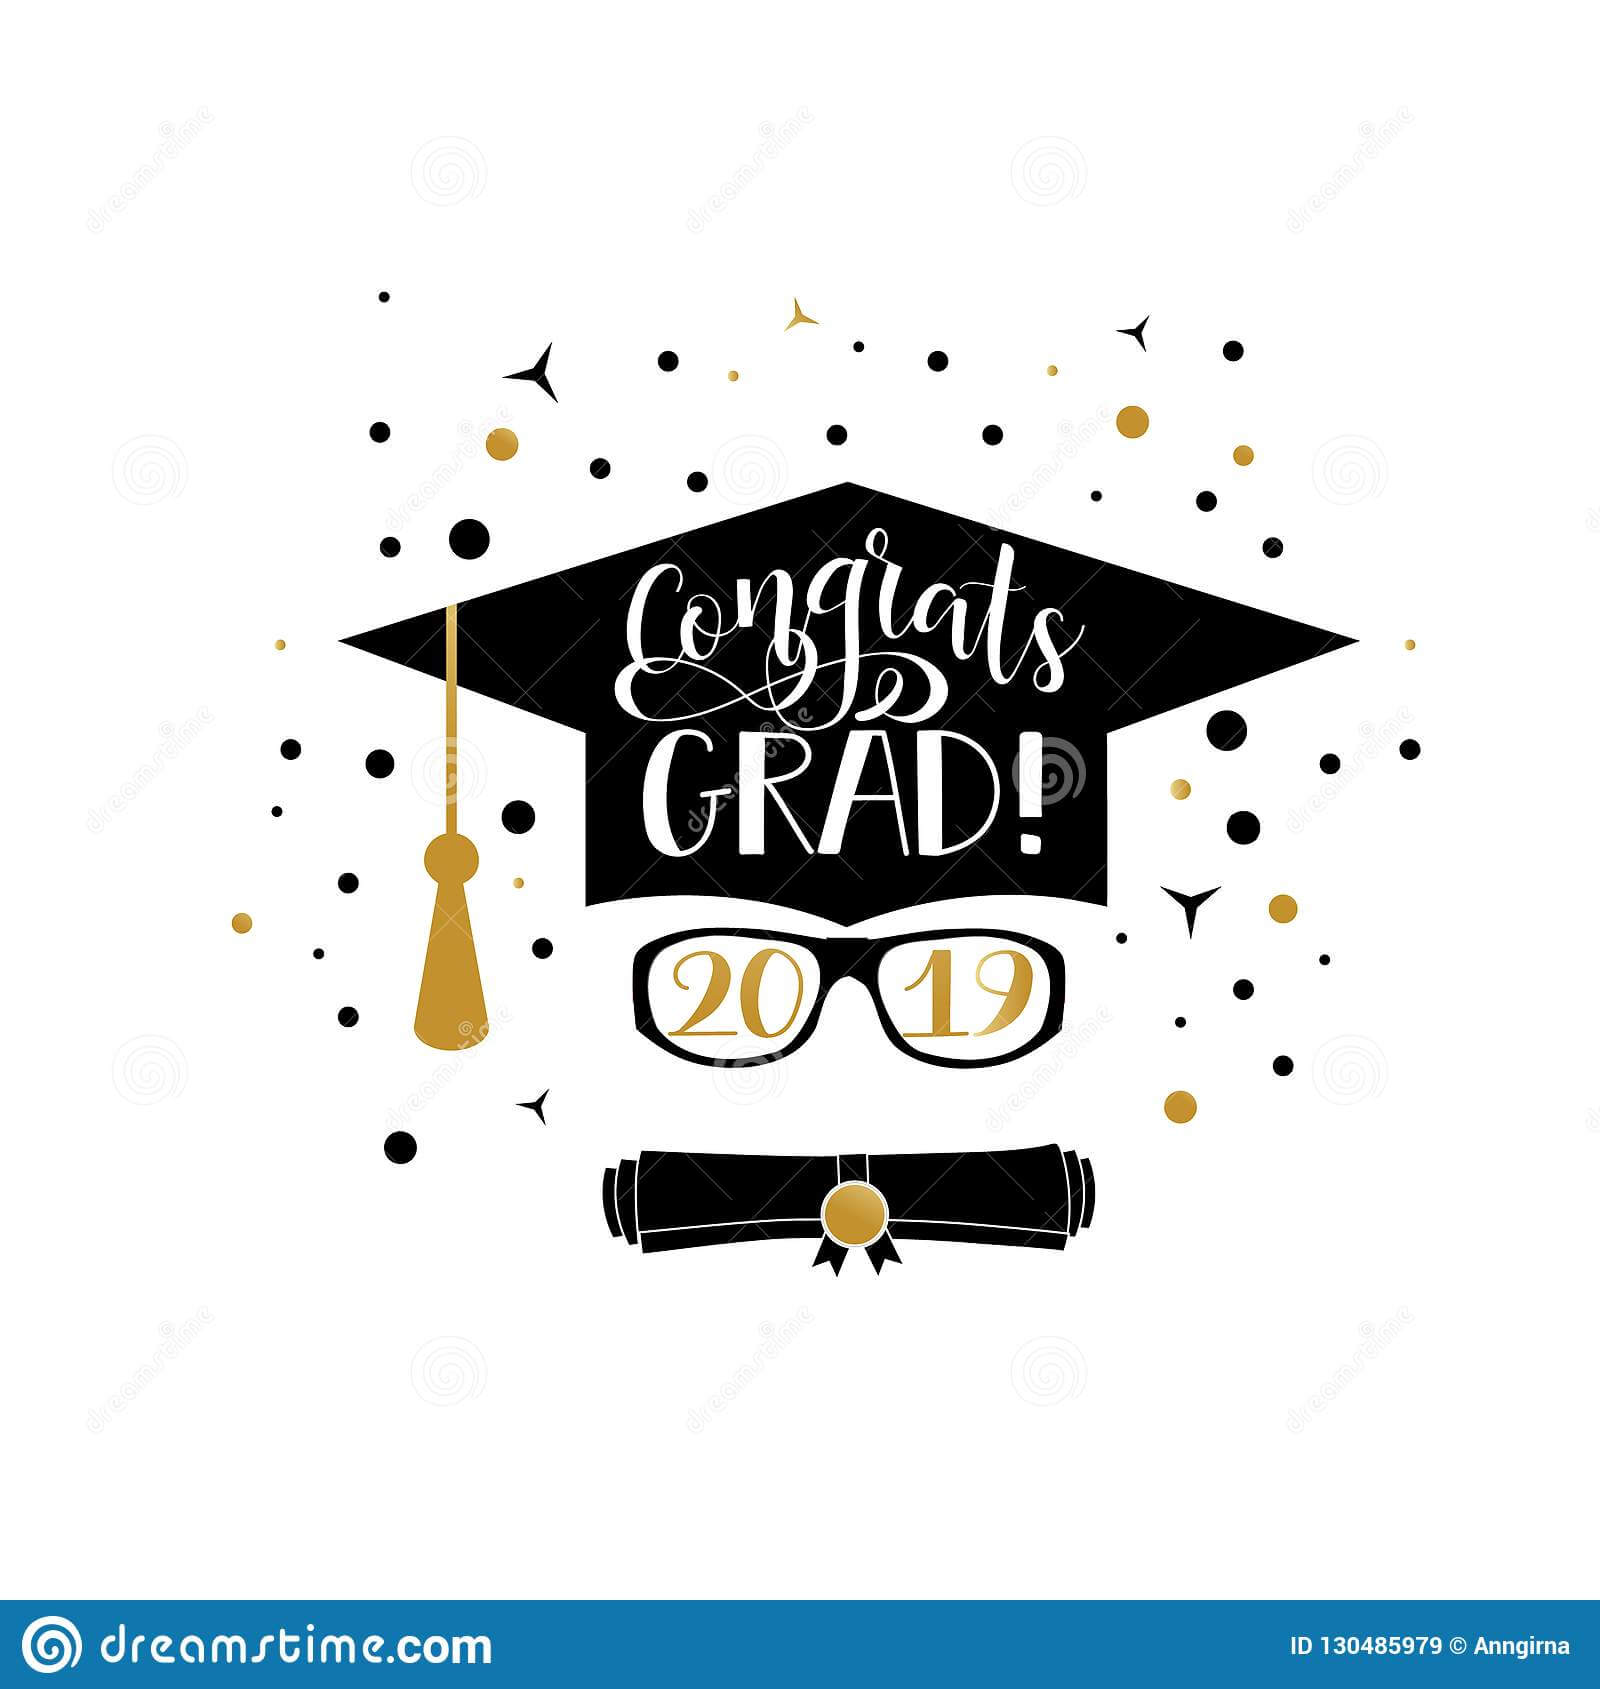 Congrats Grad 2019 Lettering. Congratulations Graduate Intended For Graduation Banner Template